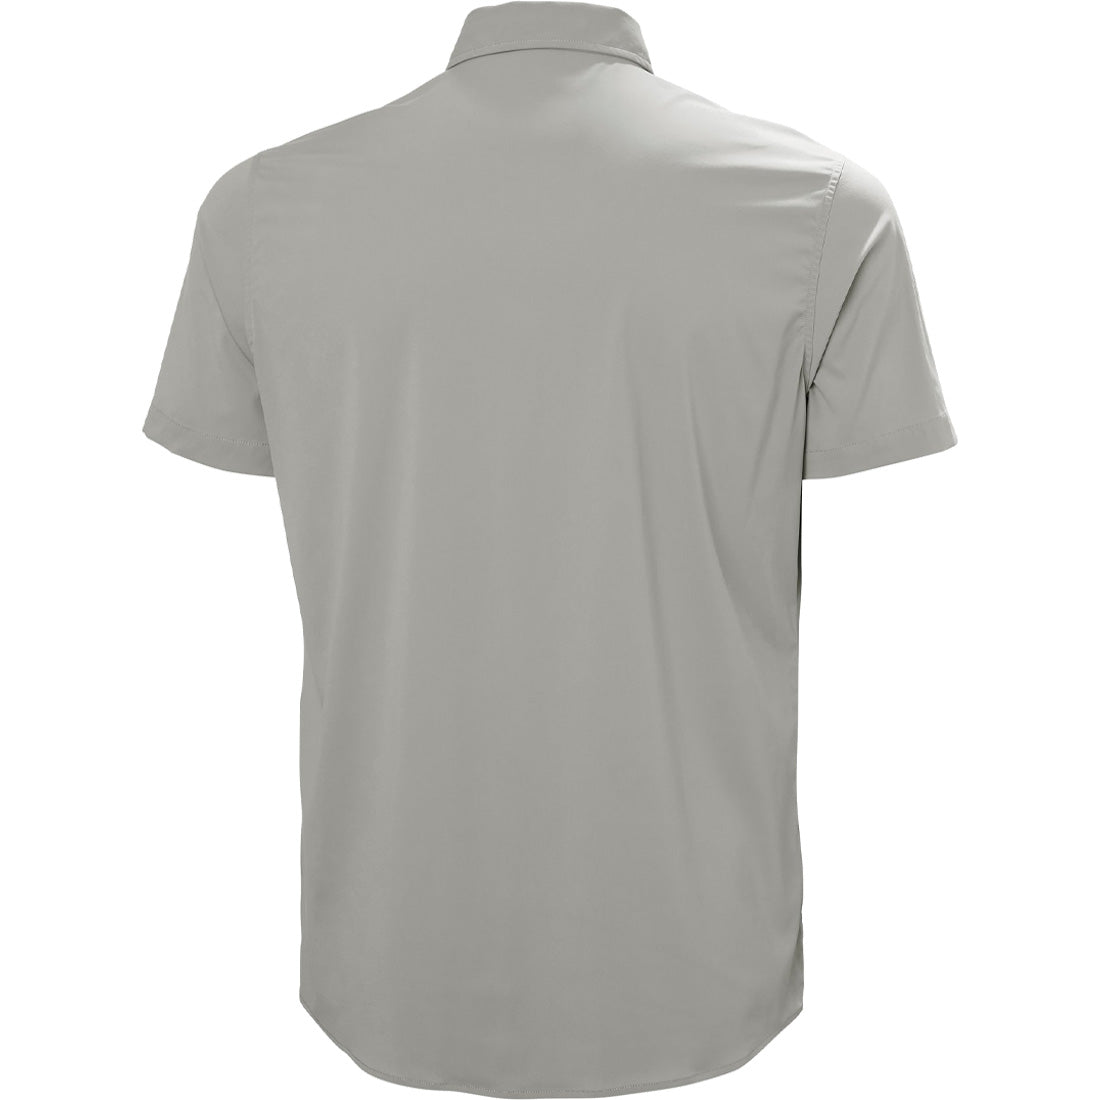 Helly Hansen Tofino Solen Short Sleeve Shirt - Men's